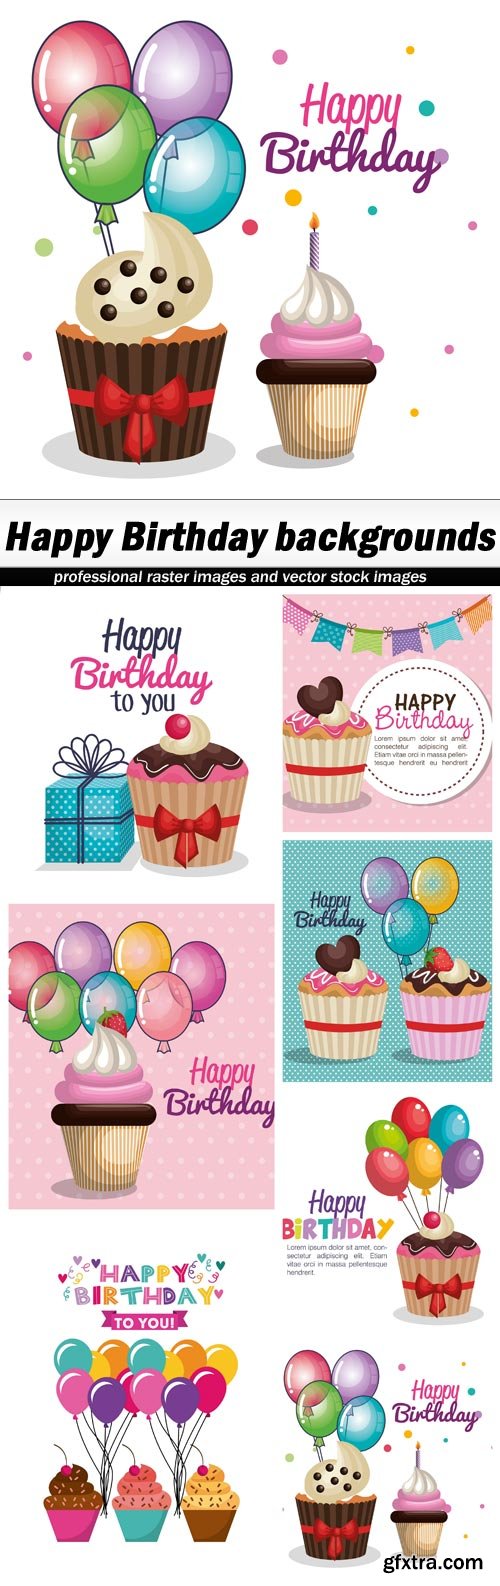 Happy Birthday backgrounds - 7 EPS